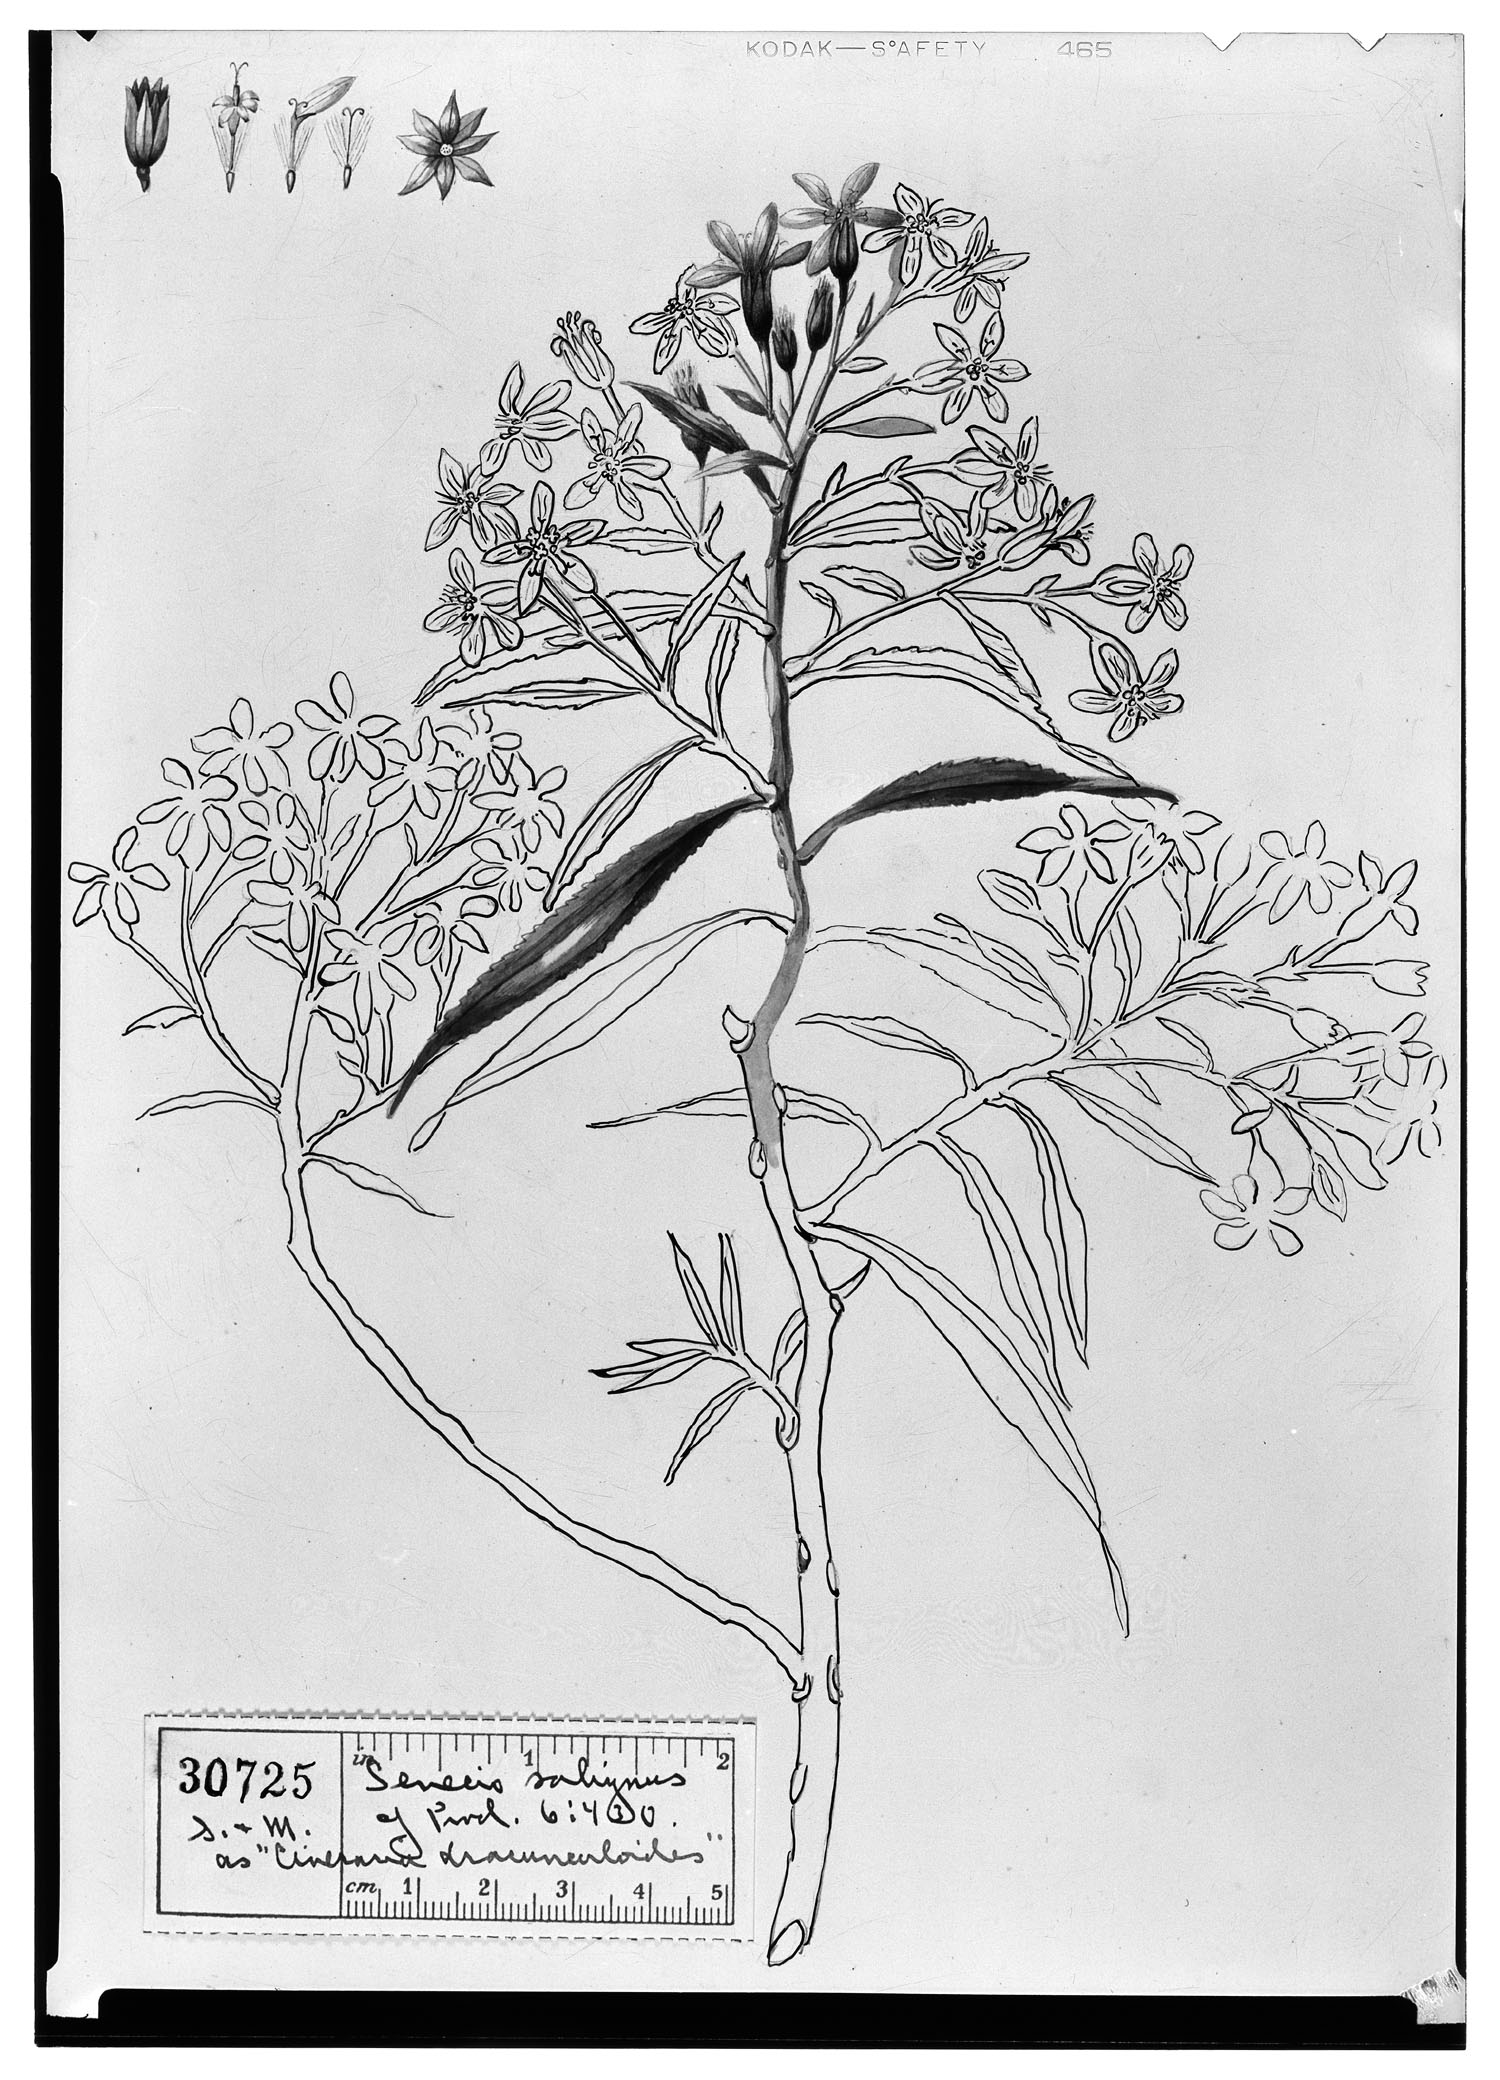 Barkleyanthus salicifolius image